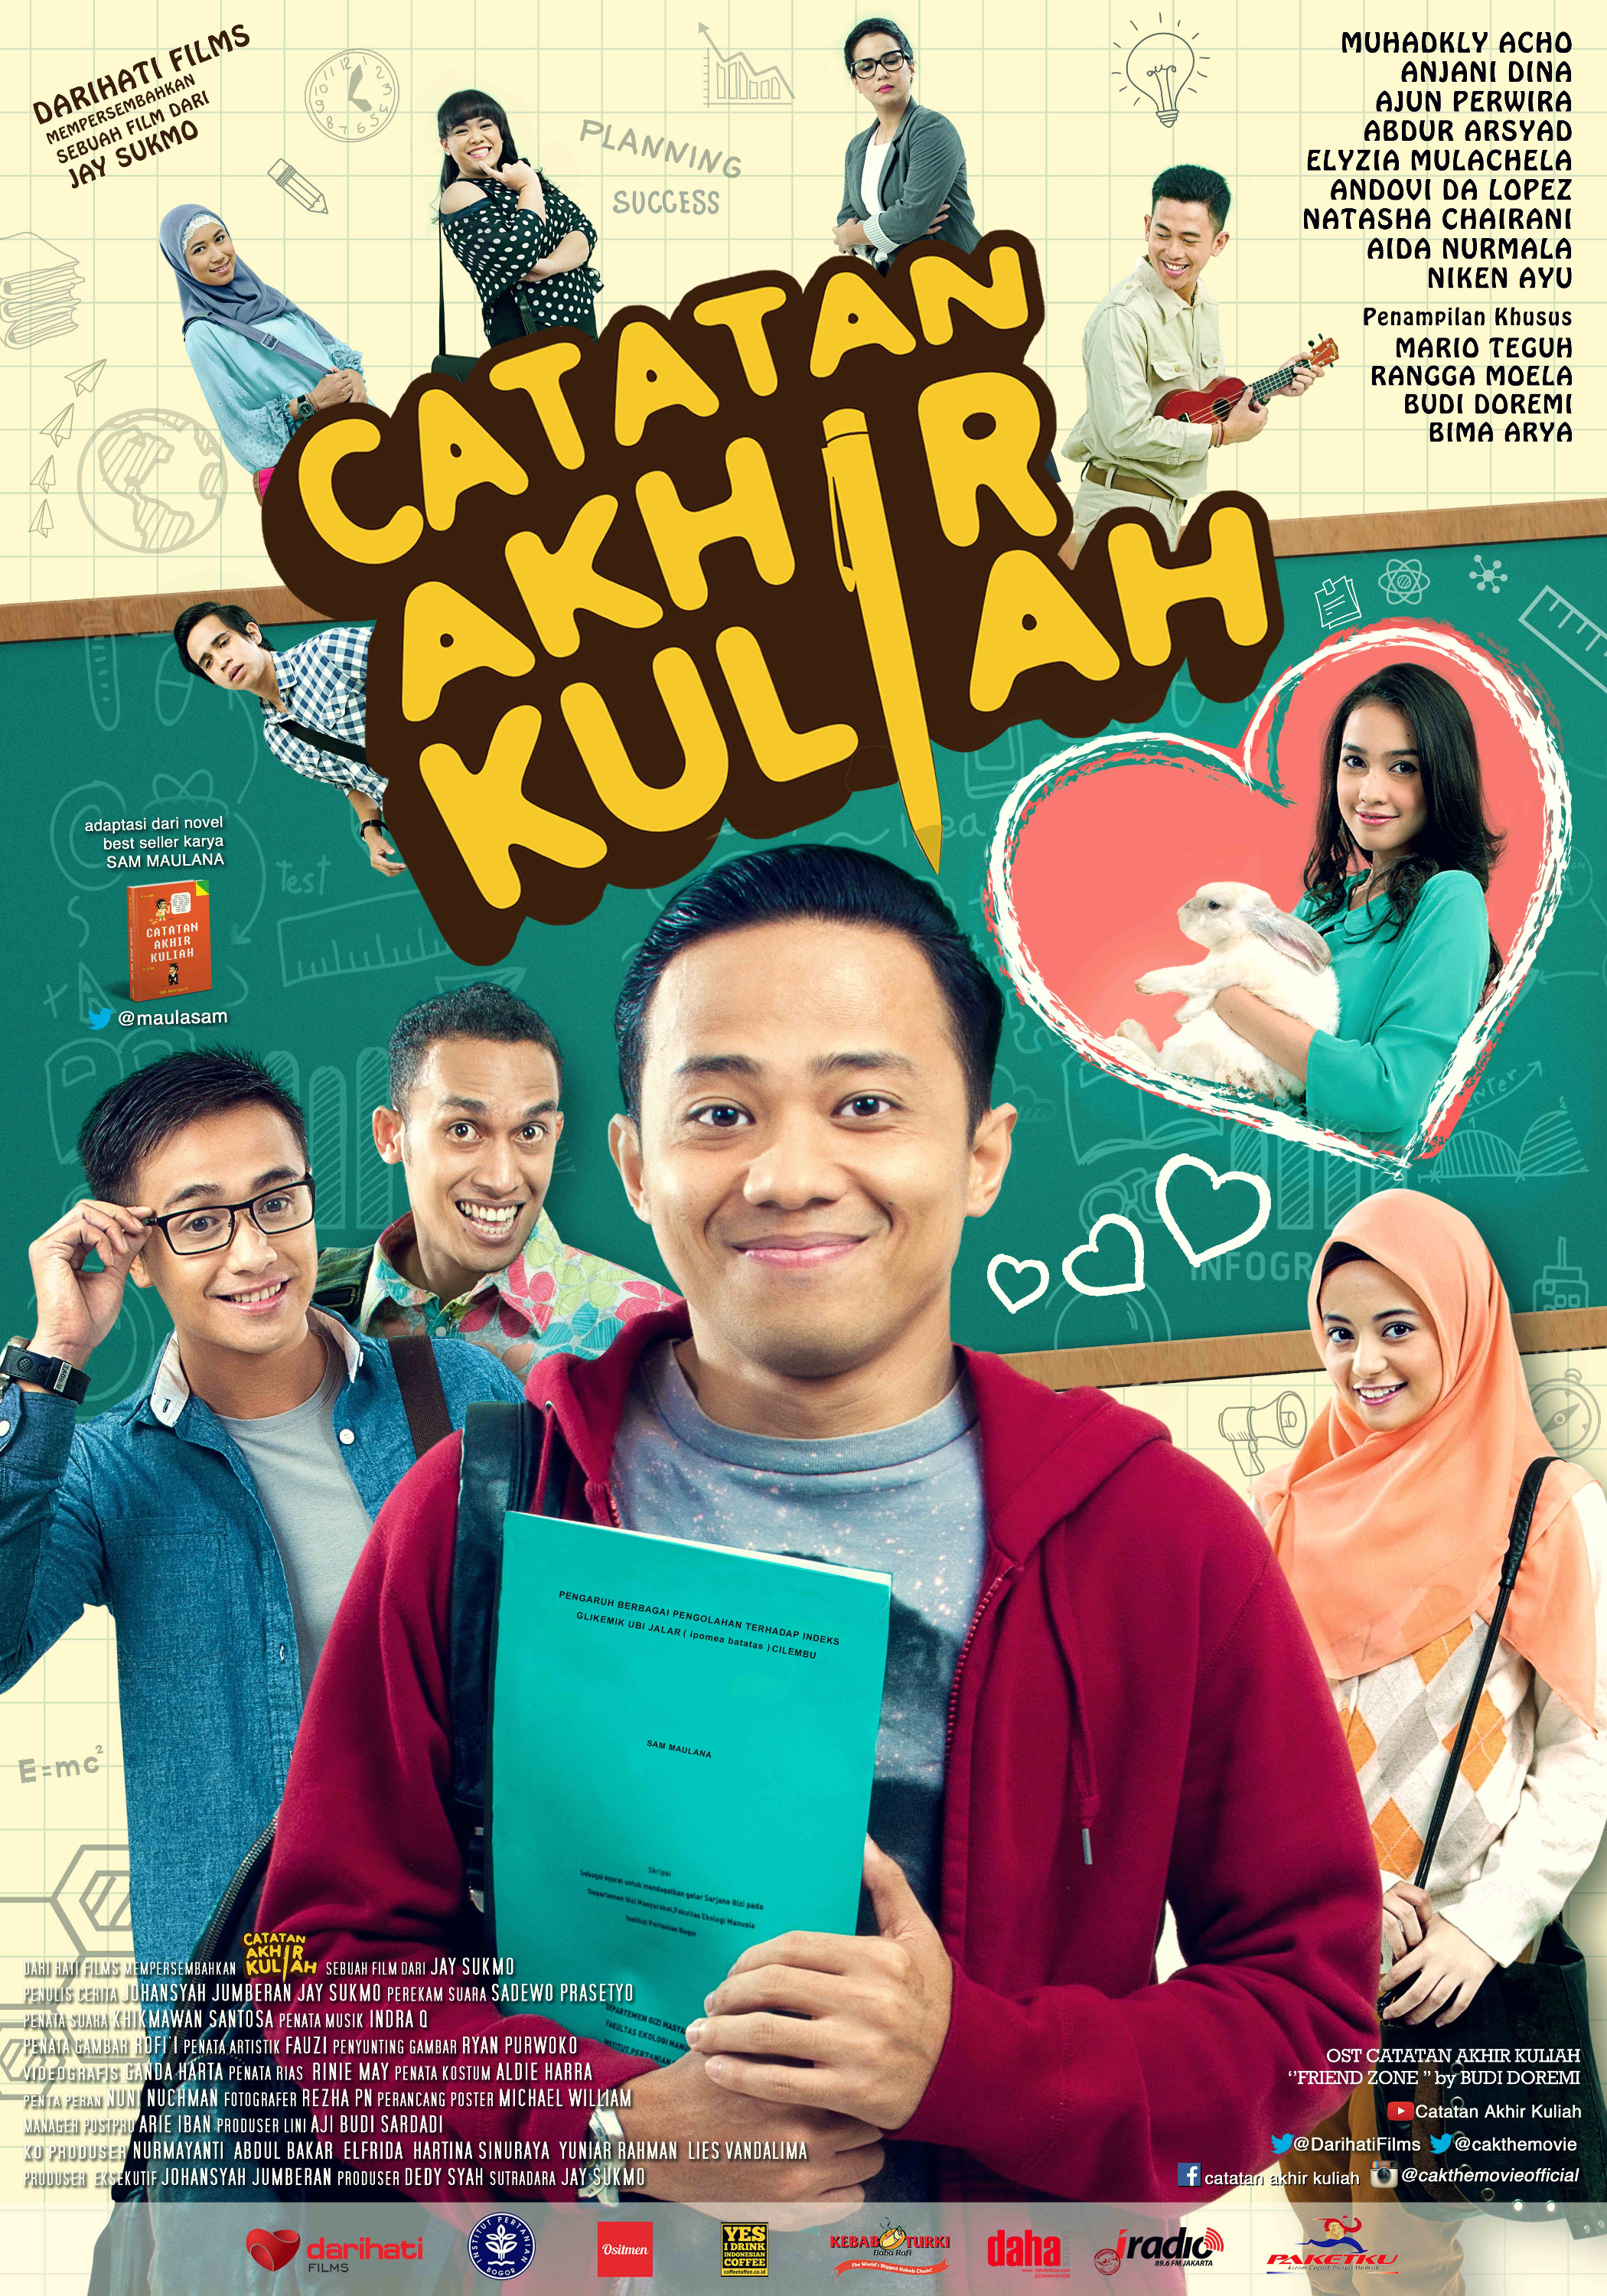 Mega Sized Movie Poster Image for Catatan Akhir Kuliah (#2 of 2)